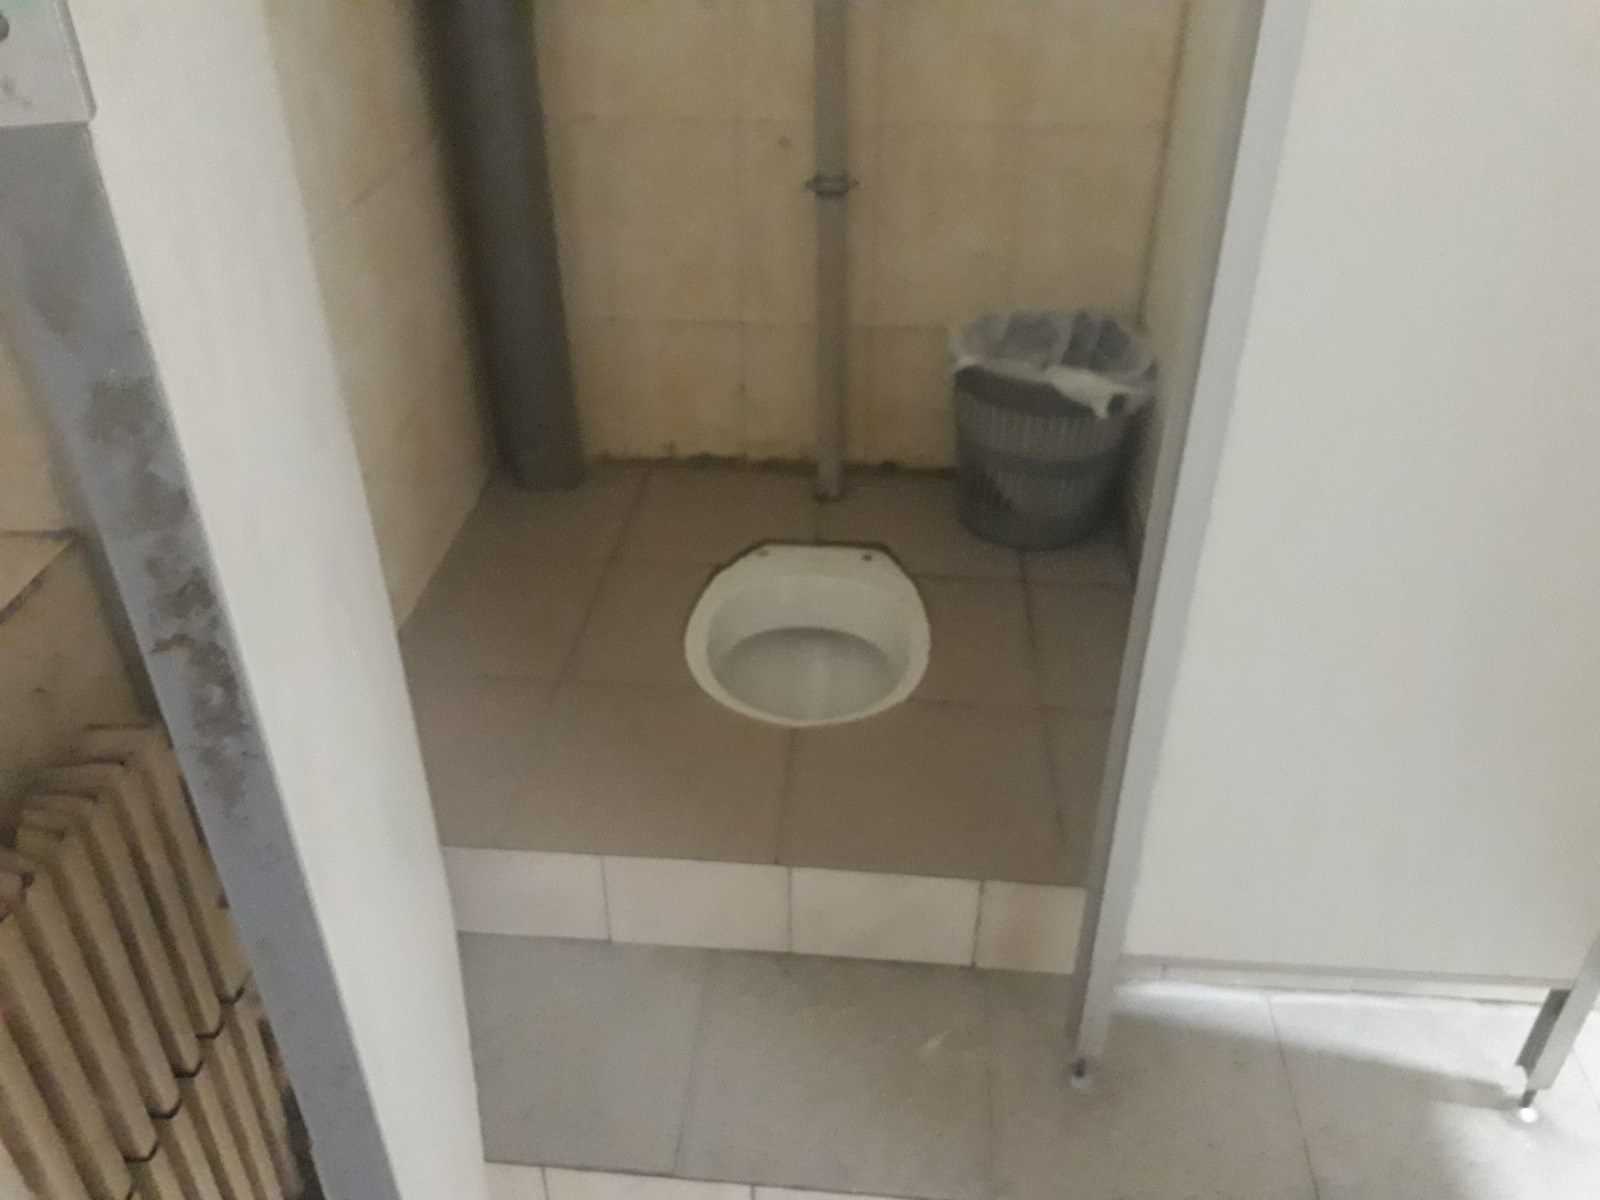 https://pichunter.club/uploads/posts/2023-04/1680513261_pichunter-club-p-porn-hairy-pussy-girls-in-dorm-toilets-54.jpg